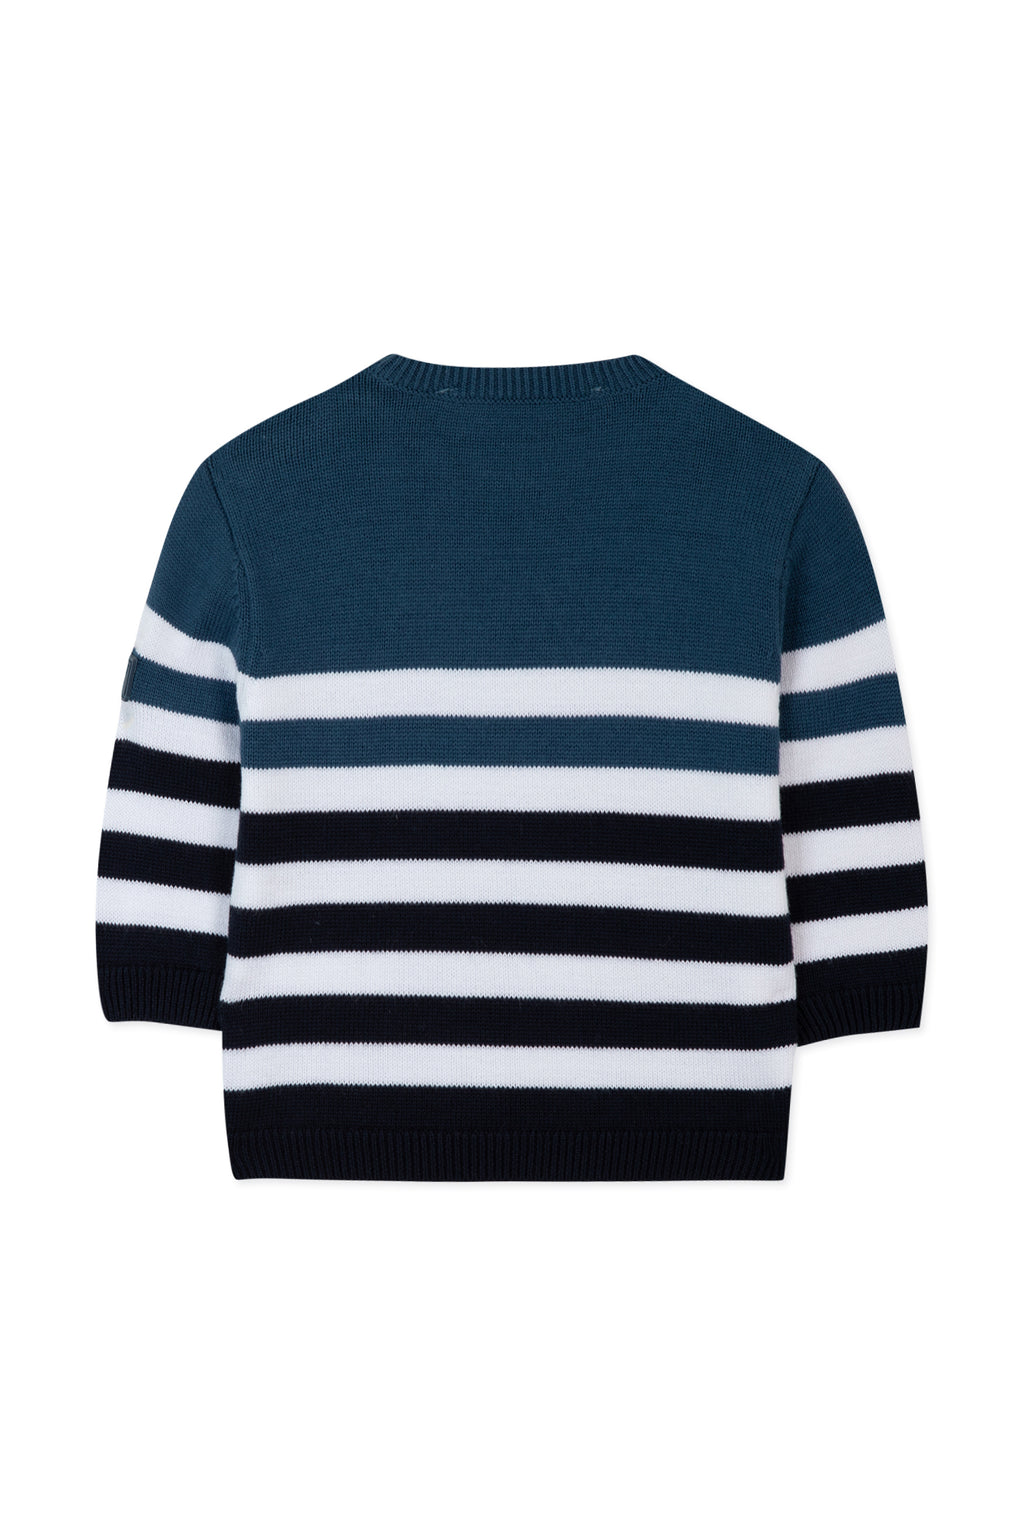 Sweater - degraded sailor